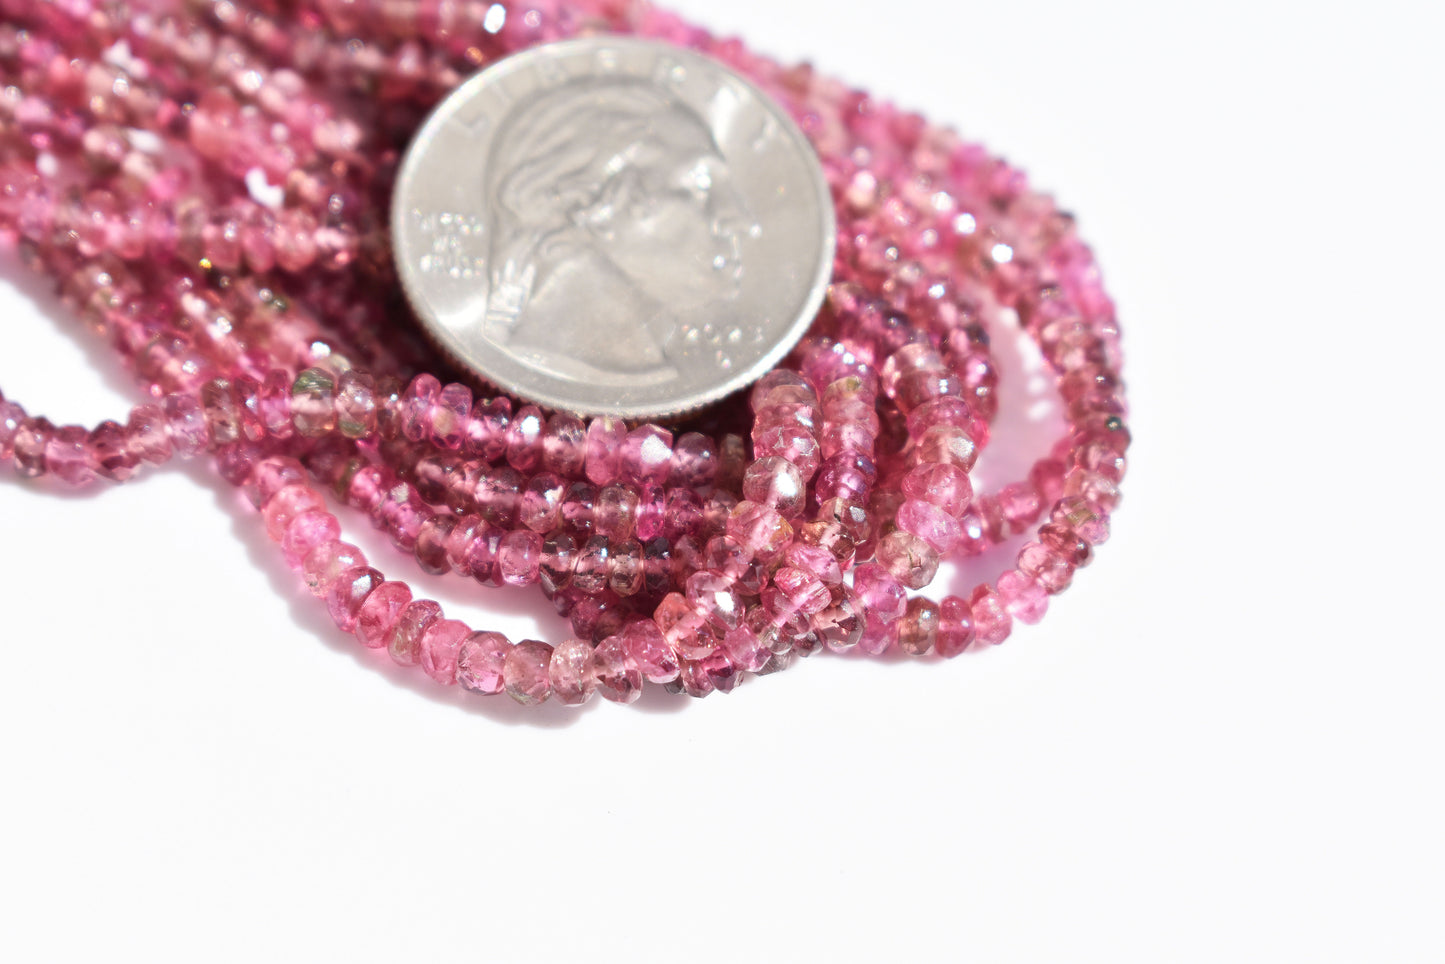 Pink Tourmaline Rondelle Beads 2-3mm